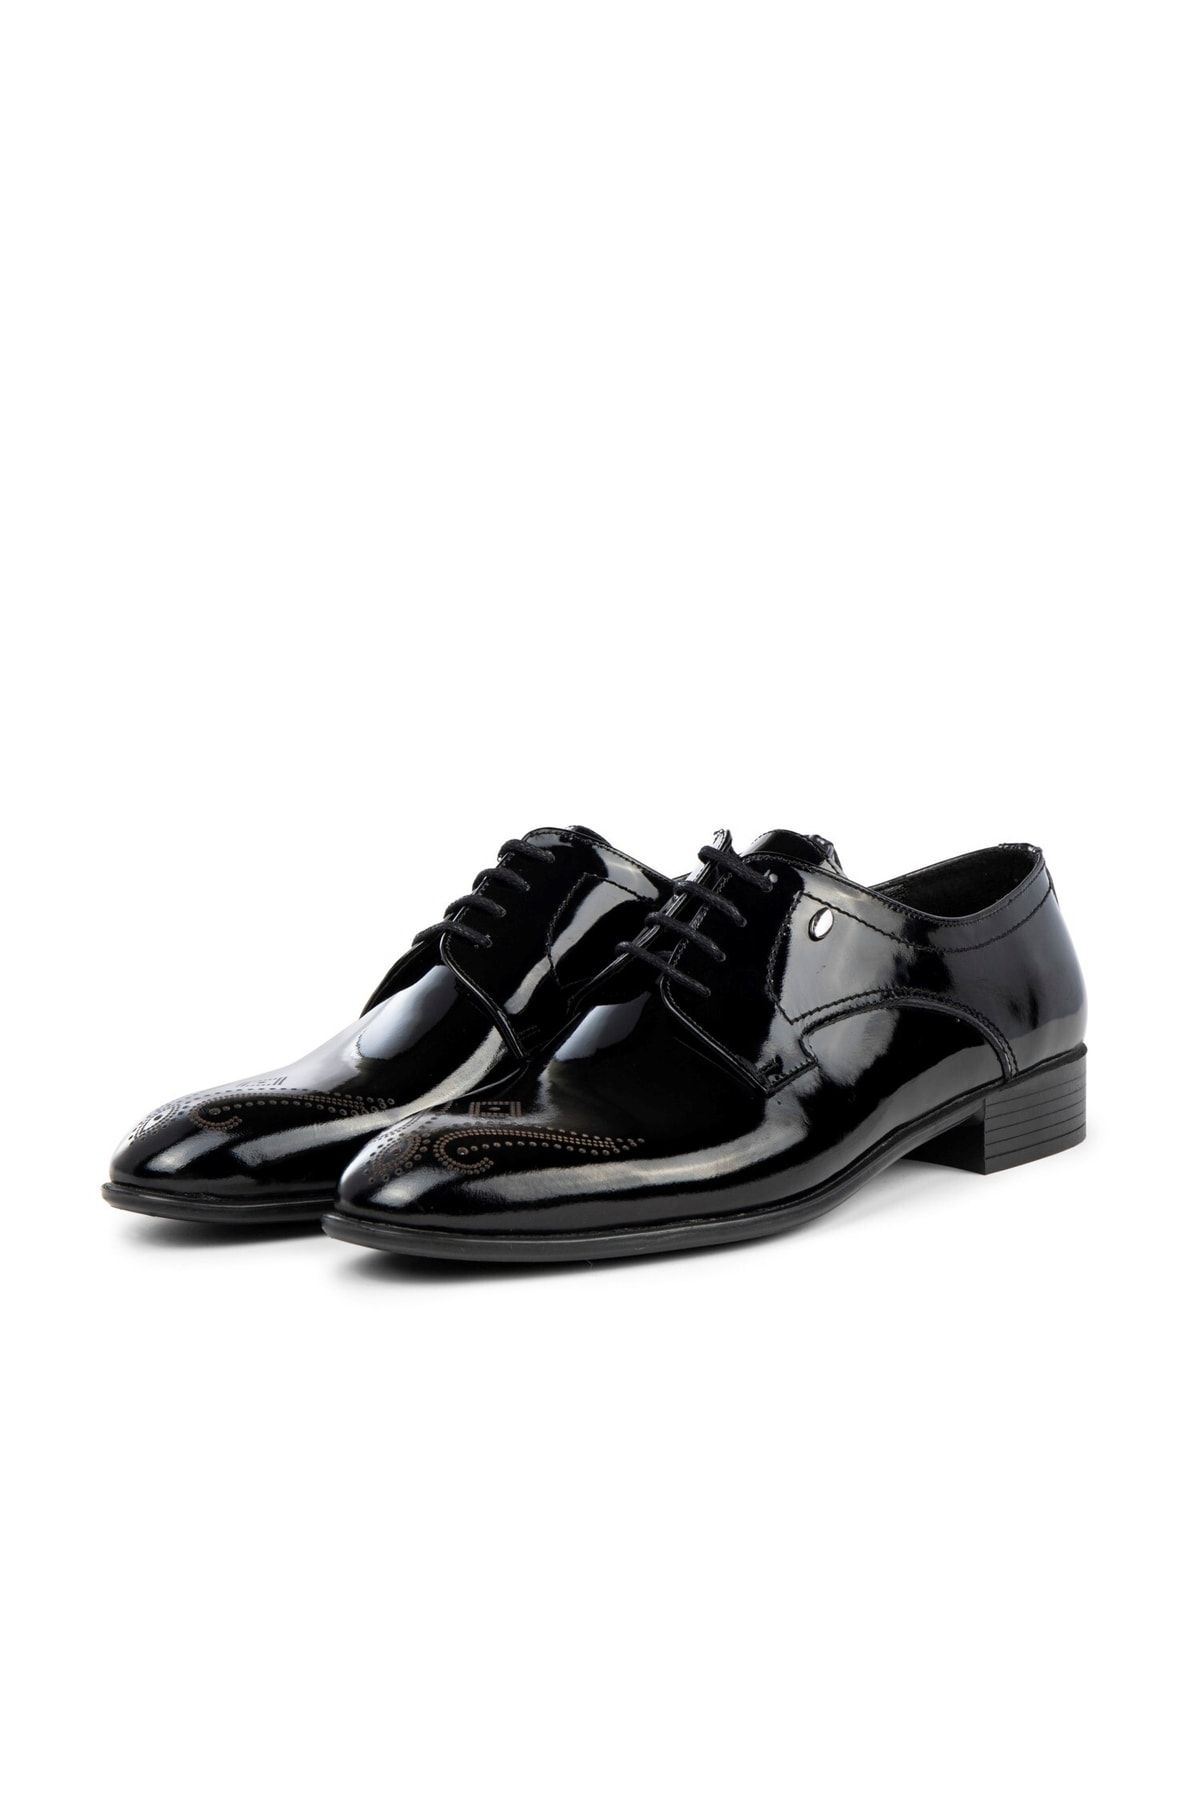 Ducavelli Taura Hakiki Deri Erkek Klasik Ayakkabı, Derby Klasik Ayakkabı, Bağcıklı Klasik Ayakkabı